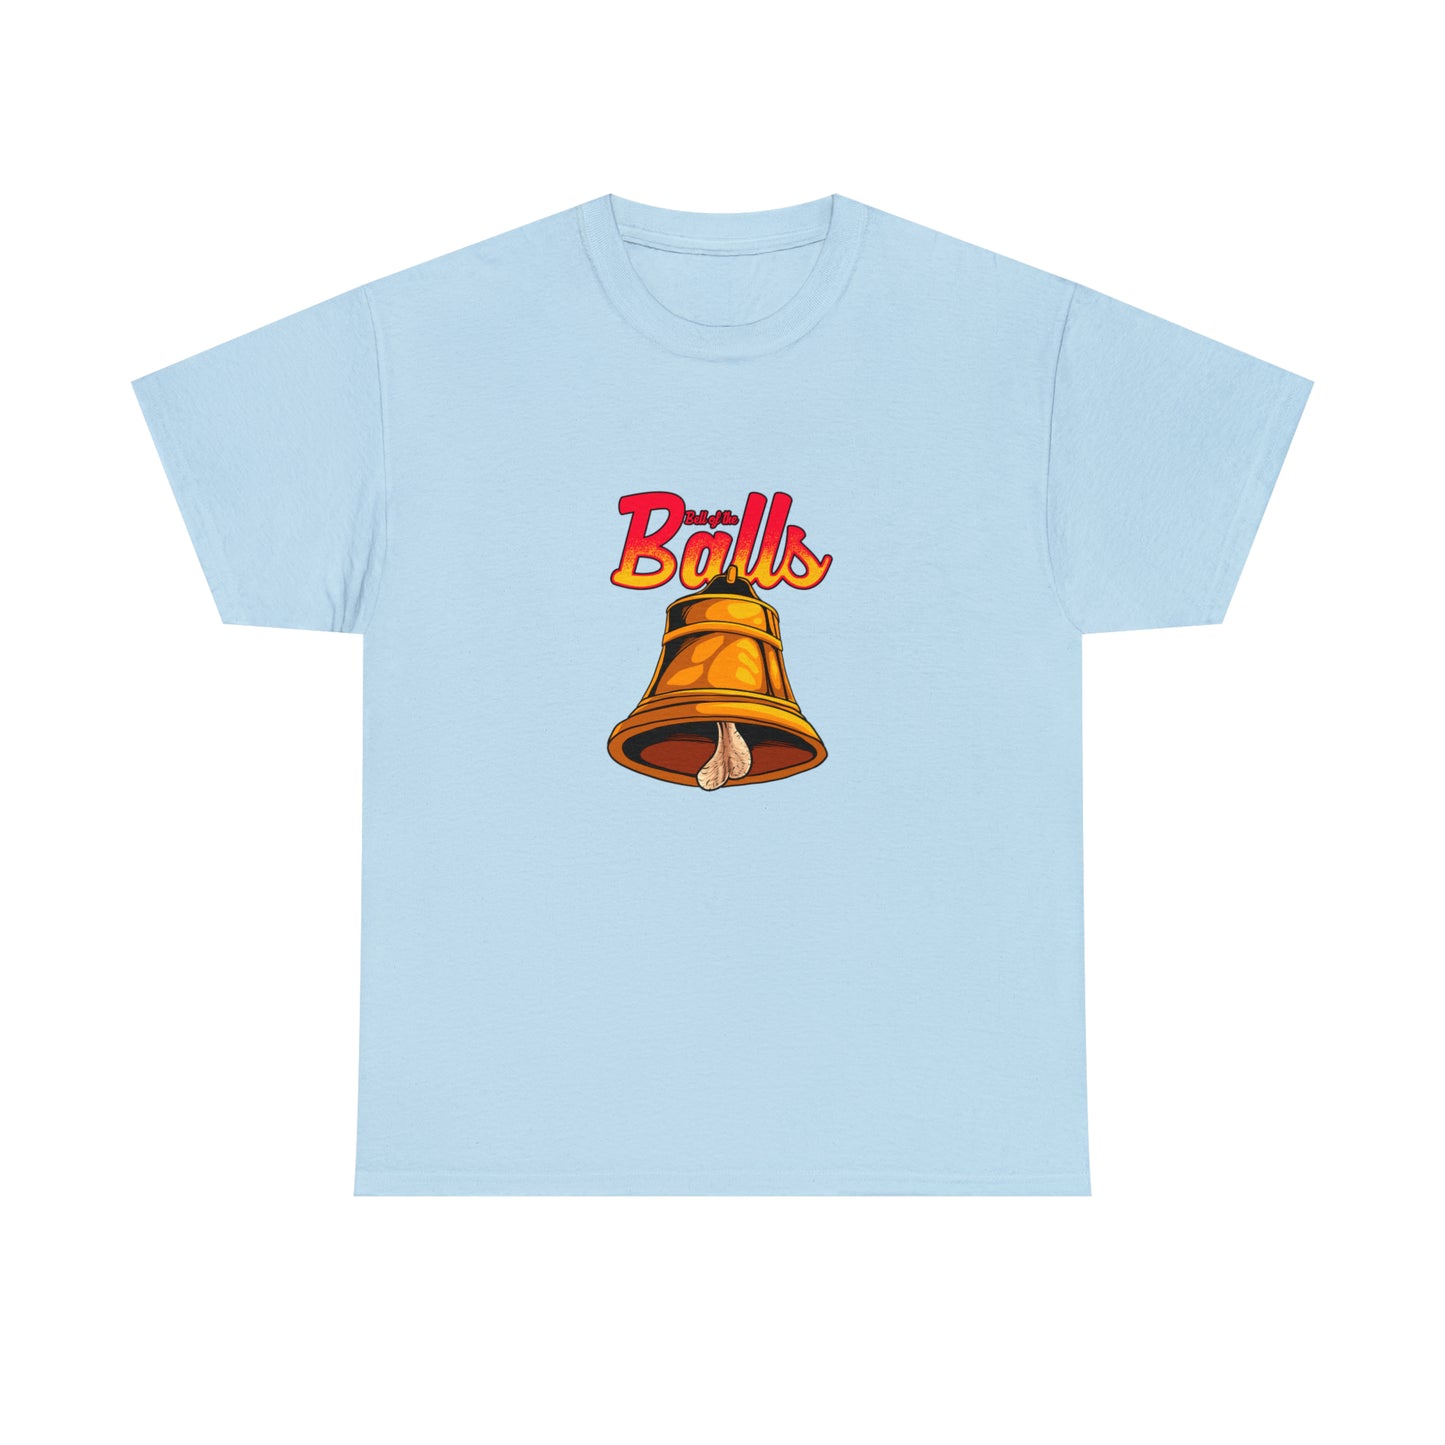 Custom Parody T-shirt, Bell of the Balls design